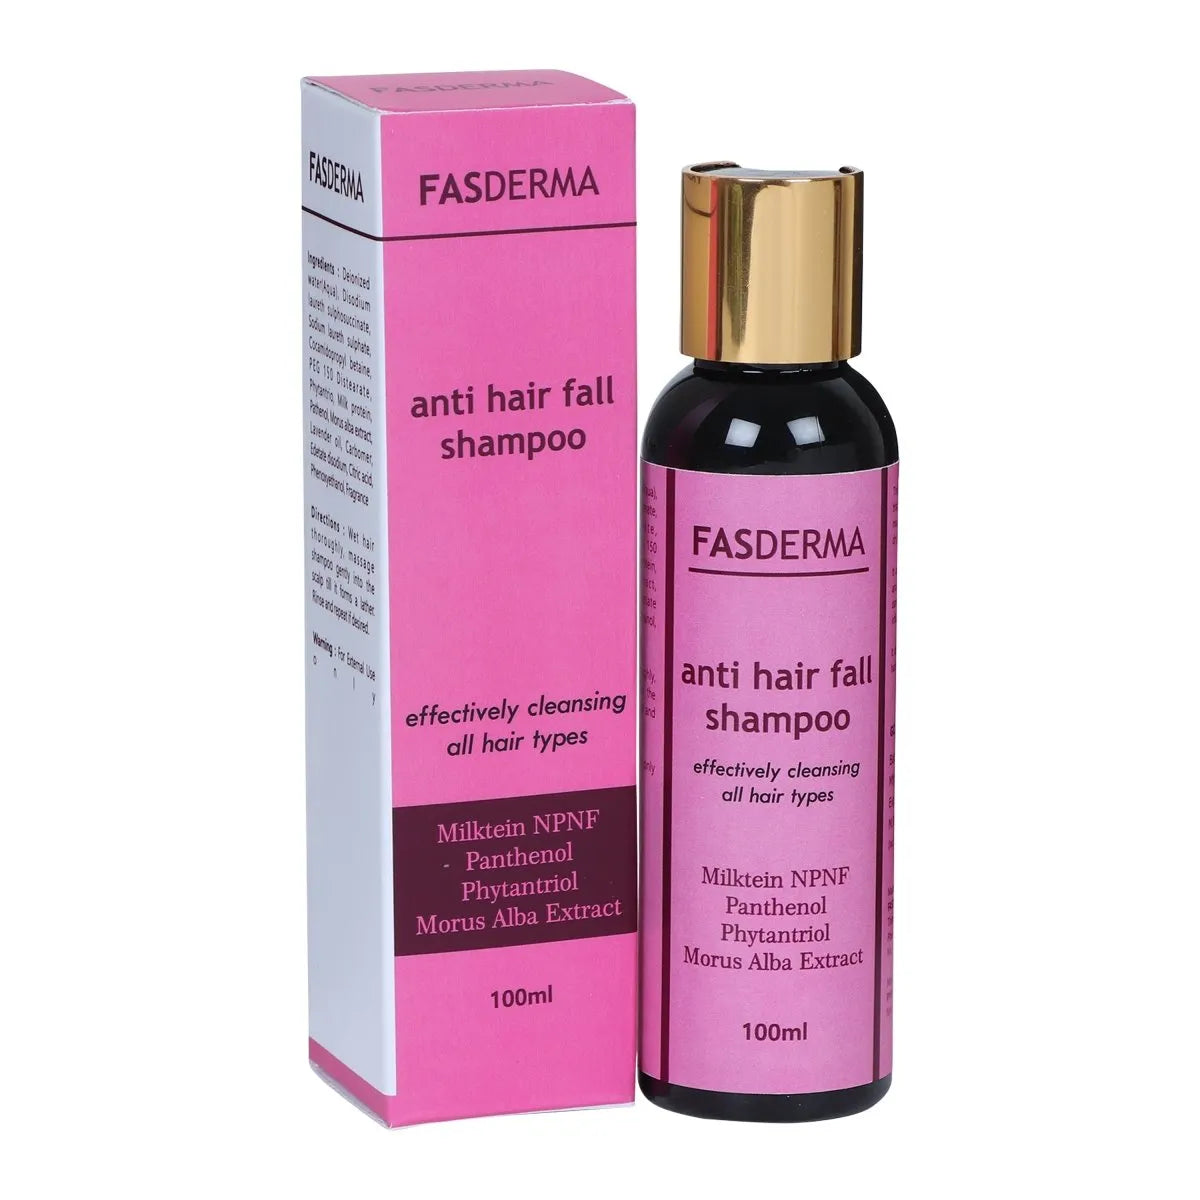 Anti Hair Fall Shampoo - 100ml - Fasderma India